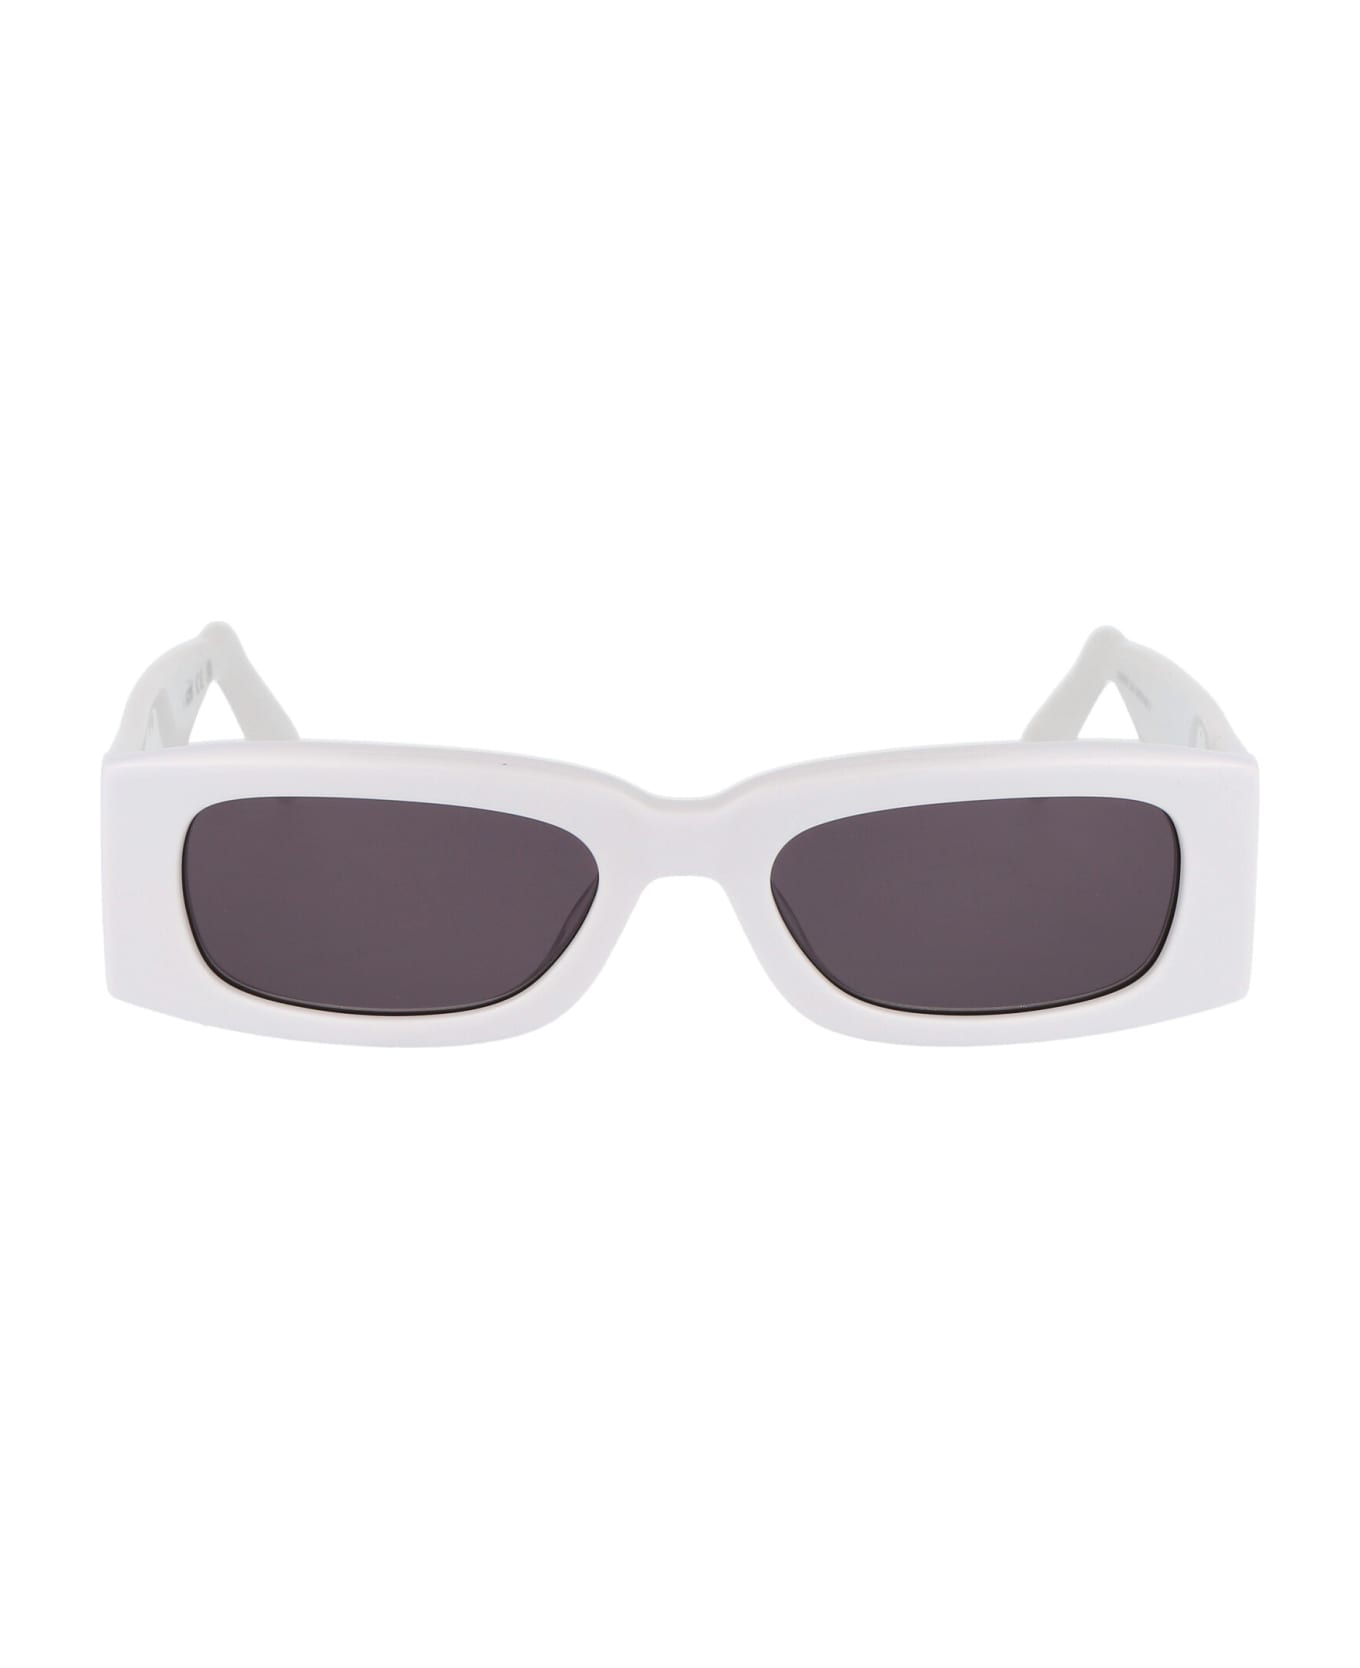 GCDS Gd0020 Sunglasses - 21A WHITE